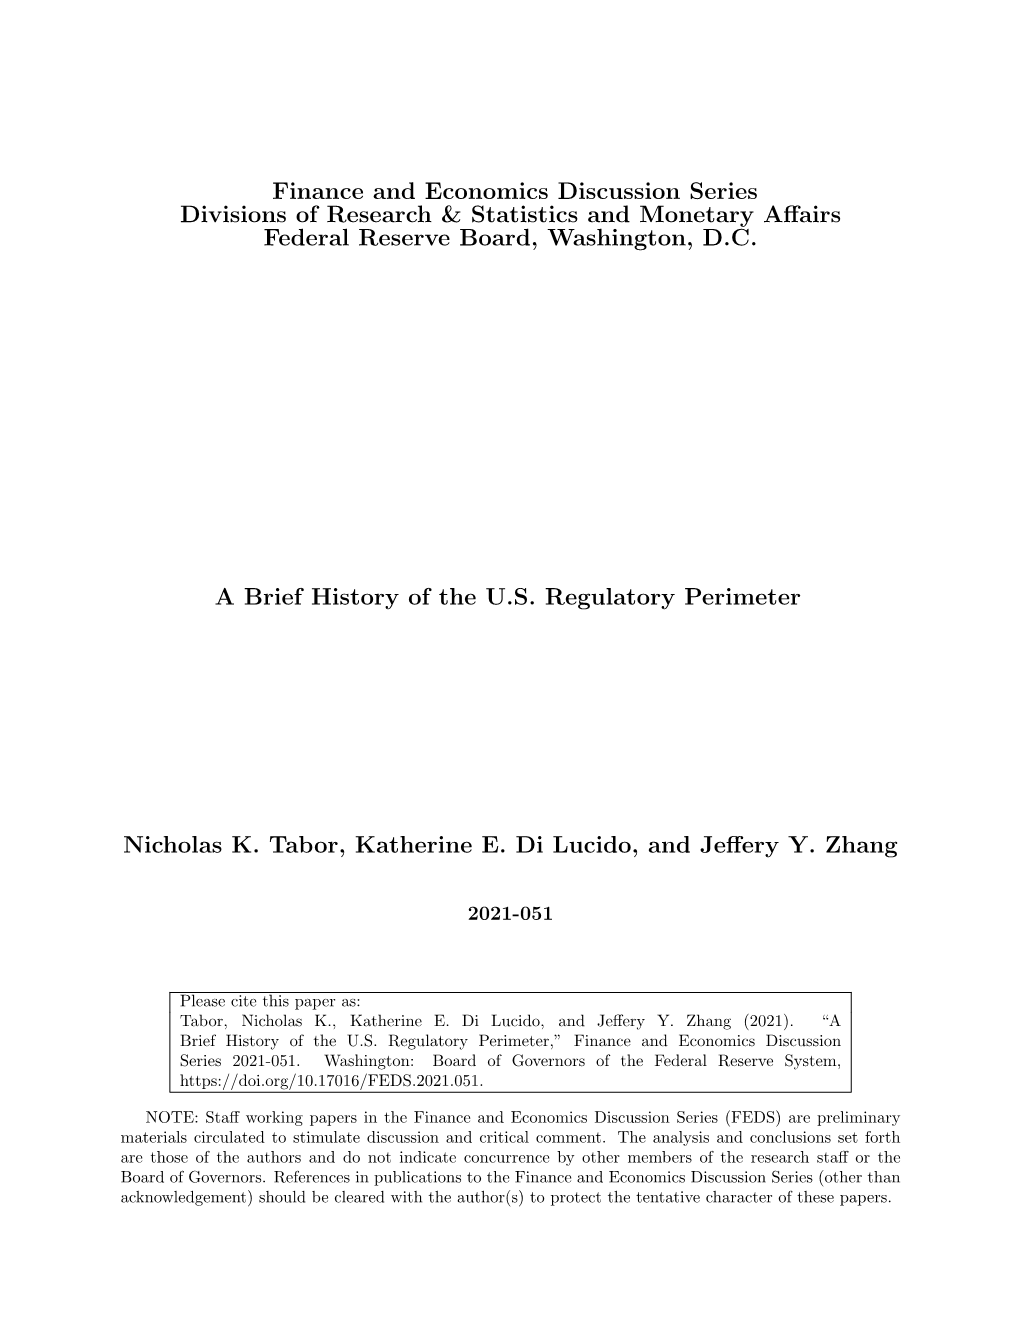 A Brief History of the U.S. Regulatory Perimeter